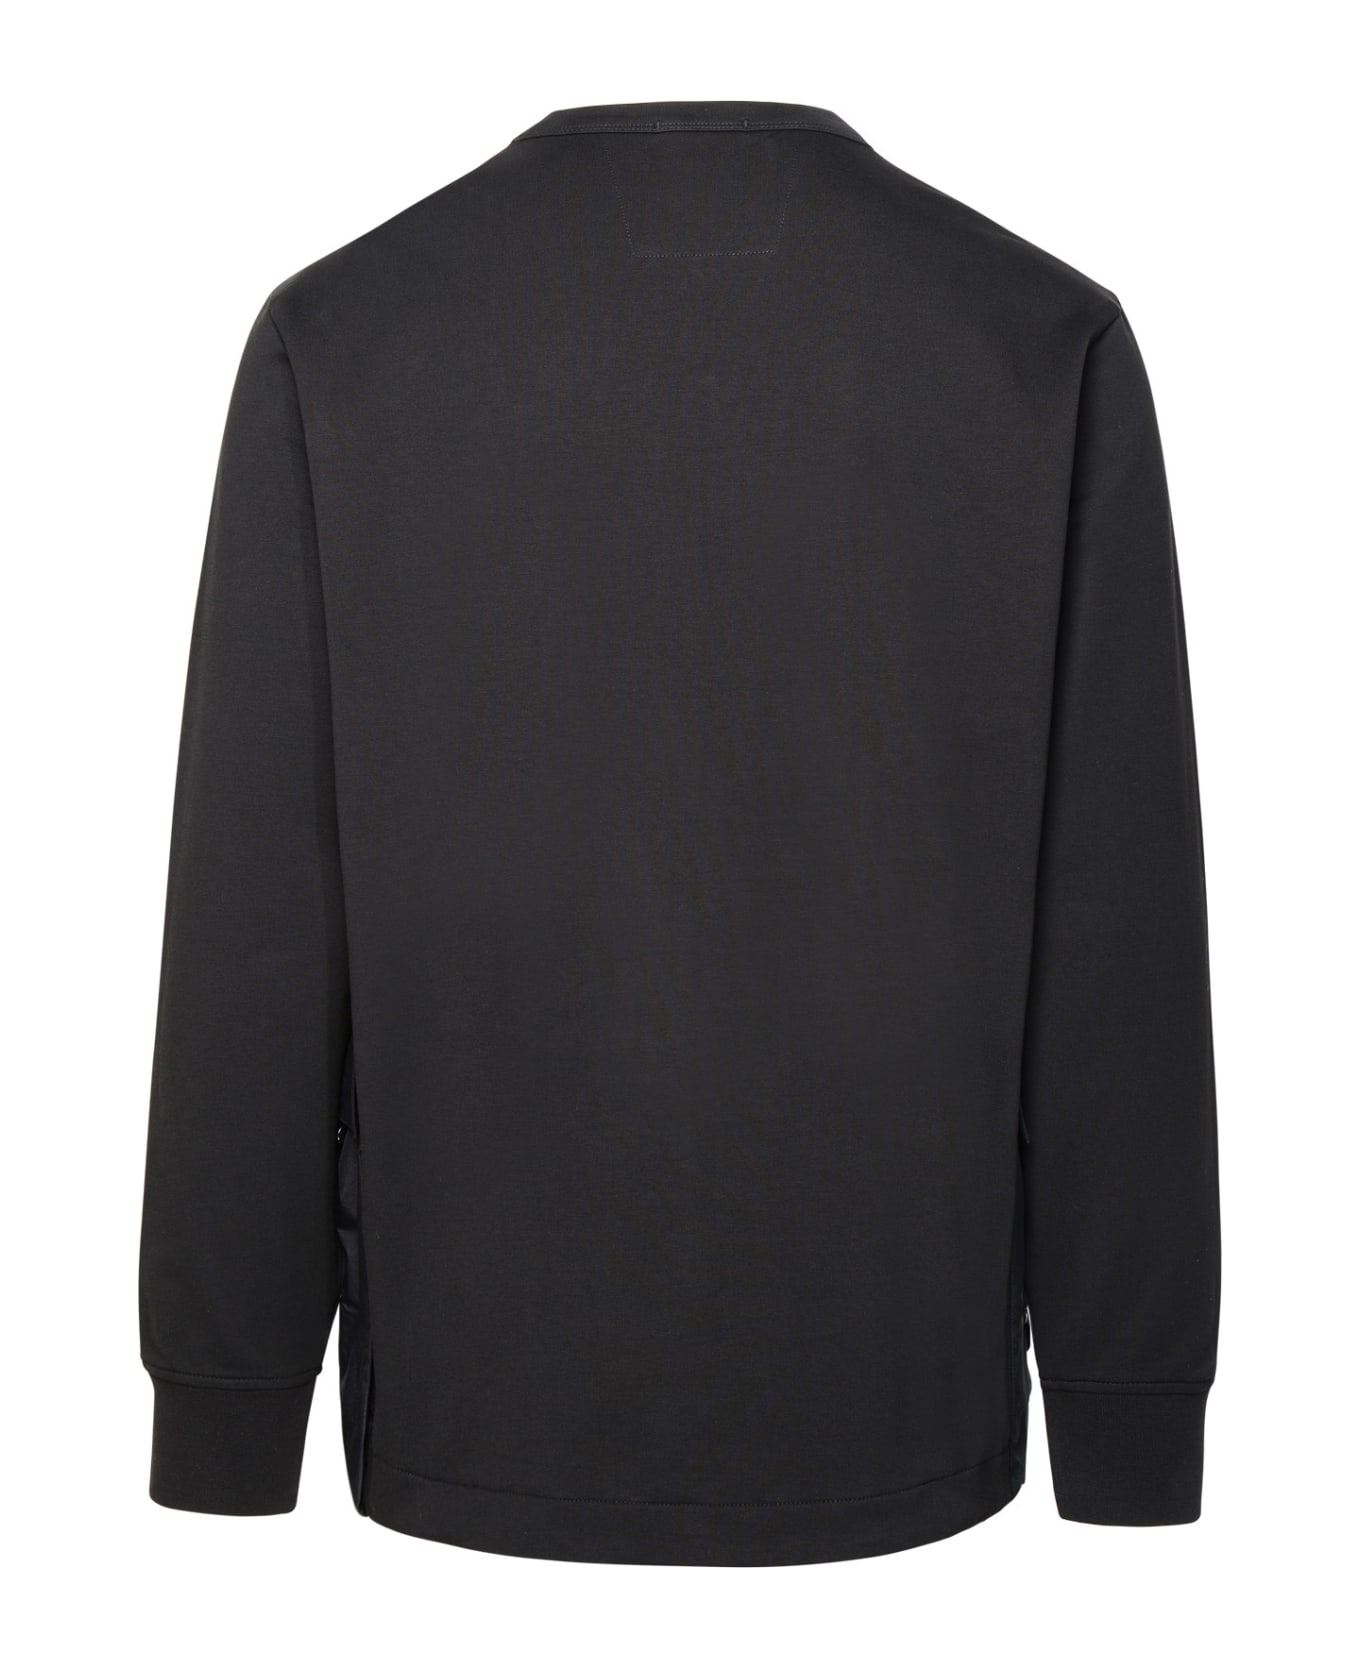 C.P. Company Black Cotton Blend Sweatshirt - Black